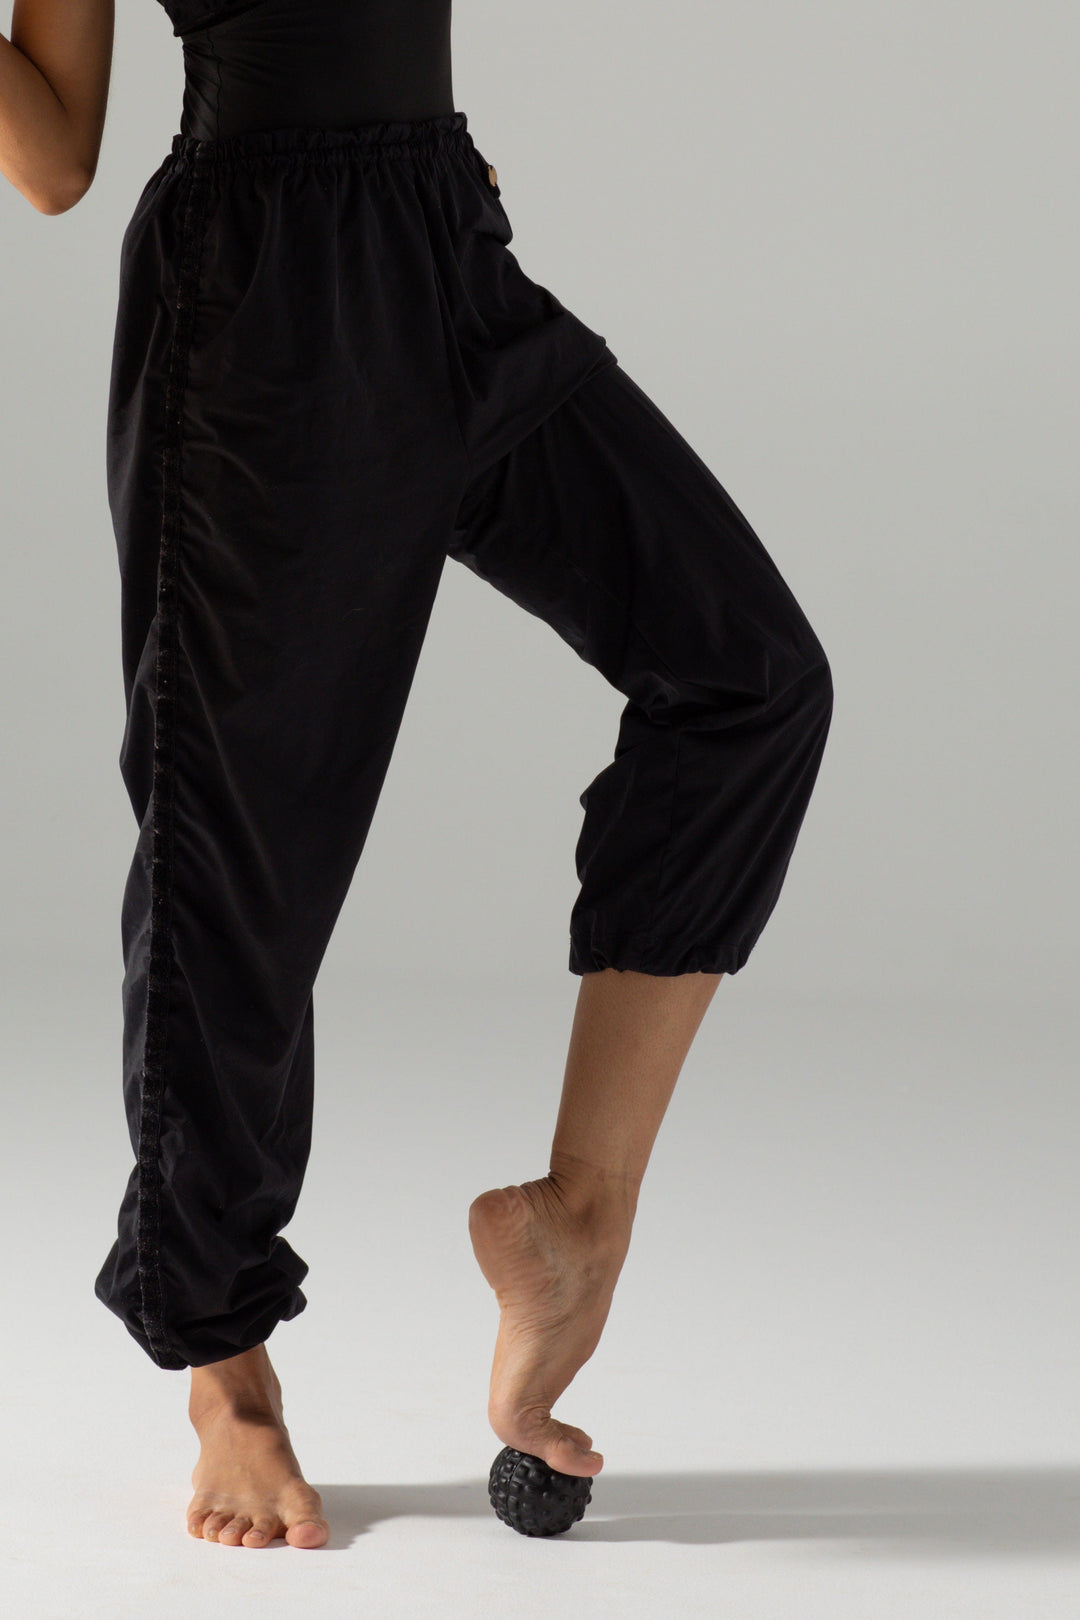 BLISS - PANTS W/SAUNA EFFECT - Jazz Rags Dancewear